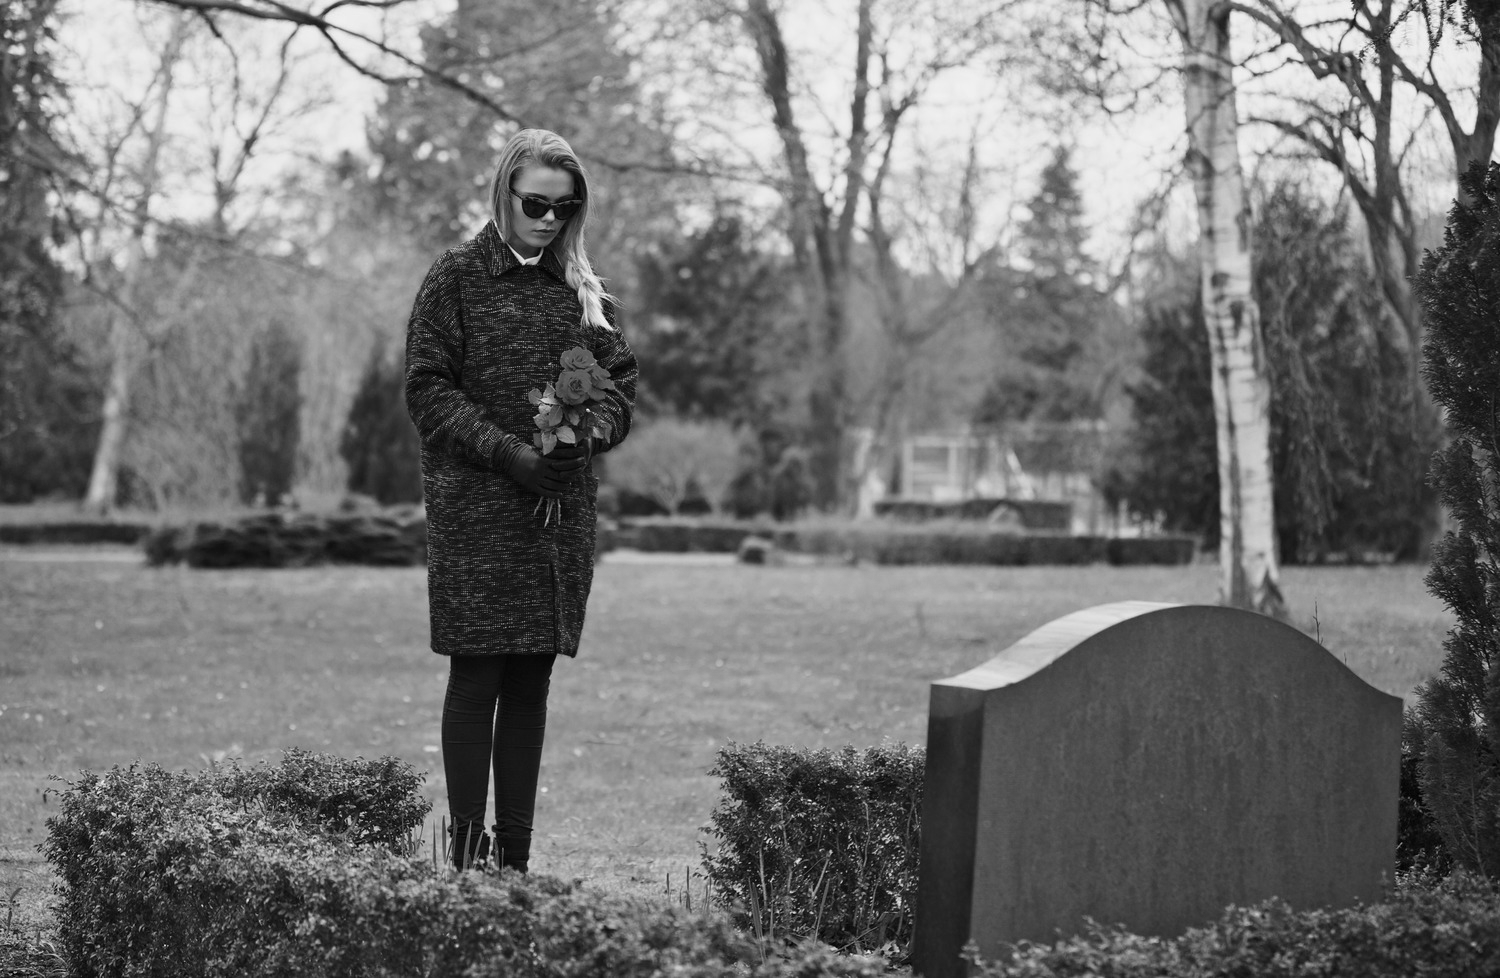 Платок на кладбище. Кладбище женщин. Женщина у могилы. Фотосессия на кладбище. Человек у могилы с цветами.